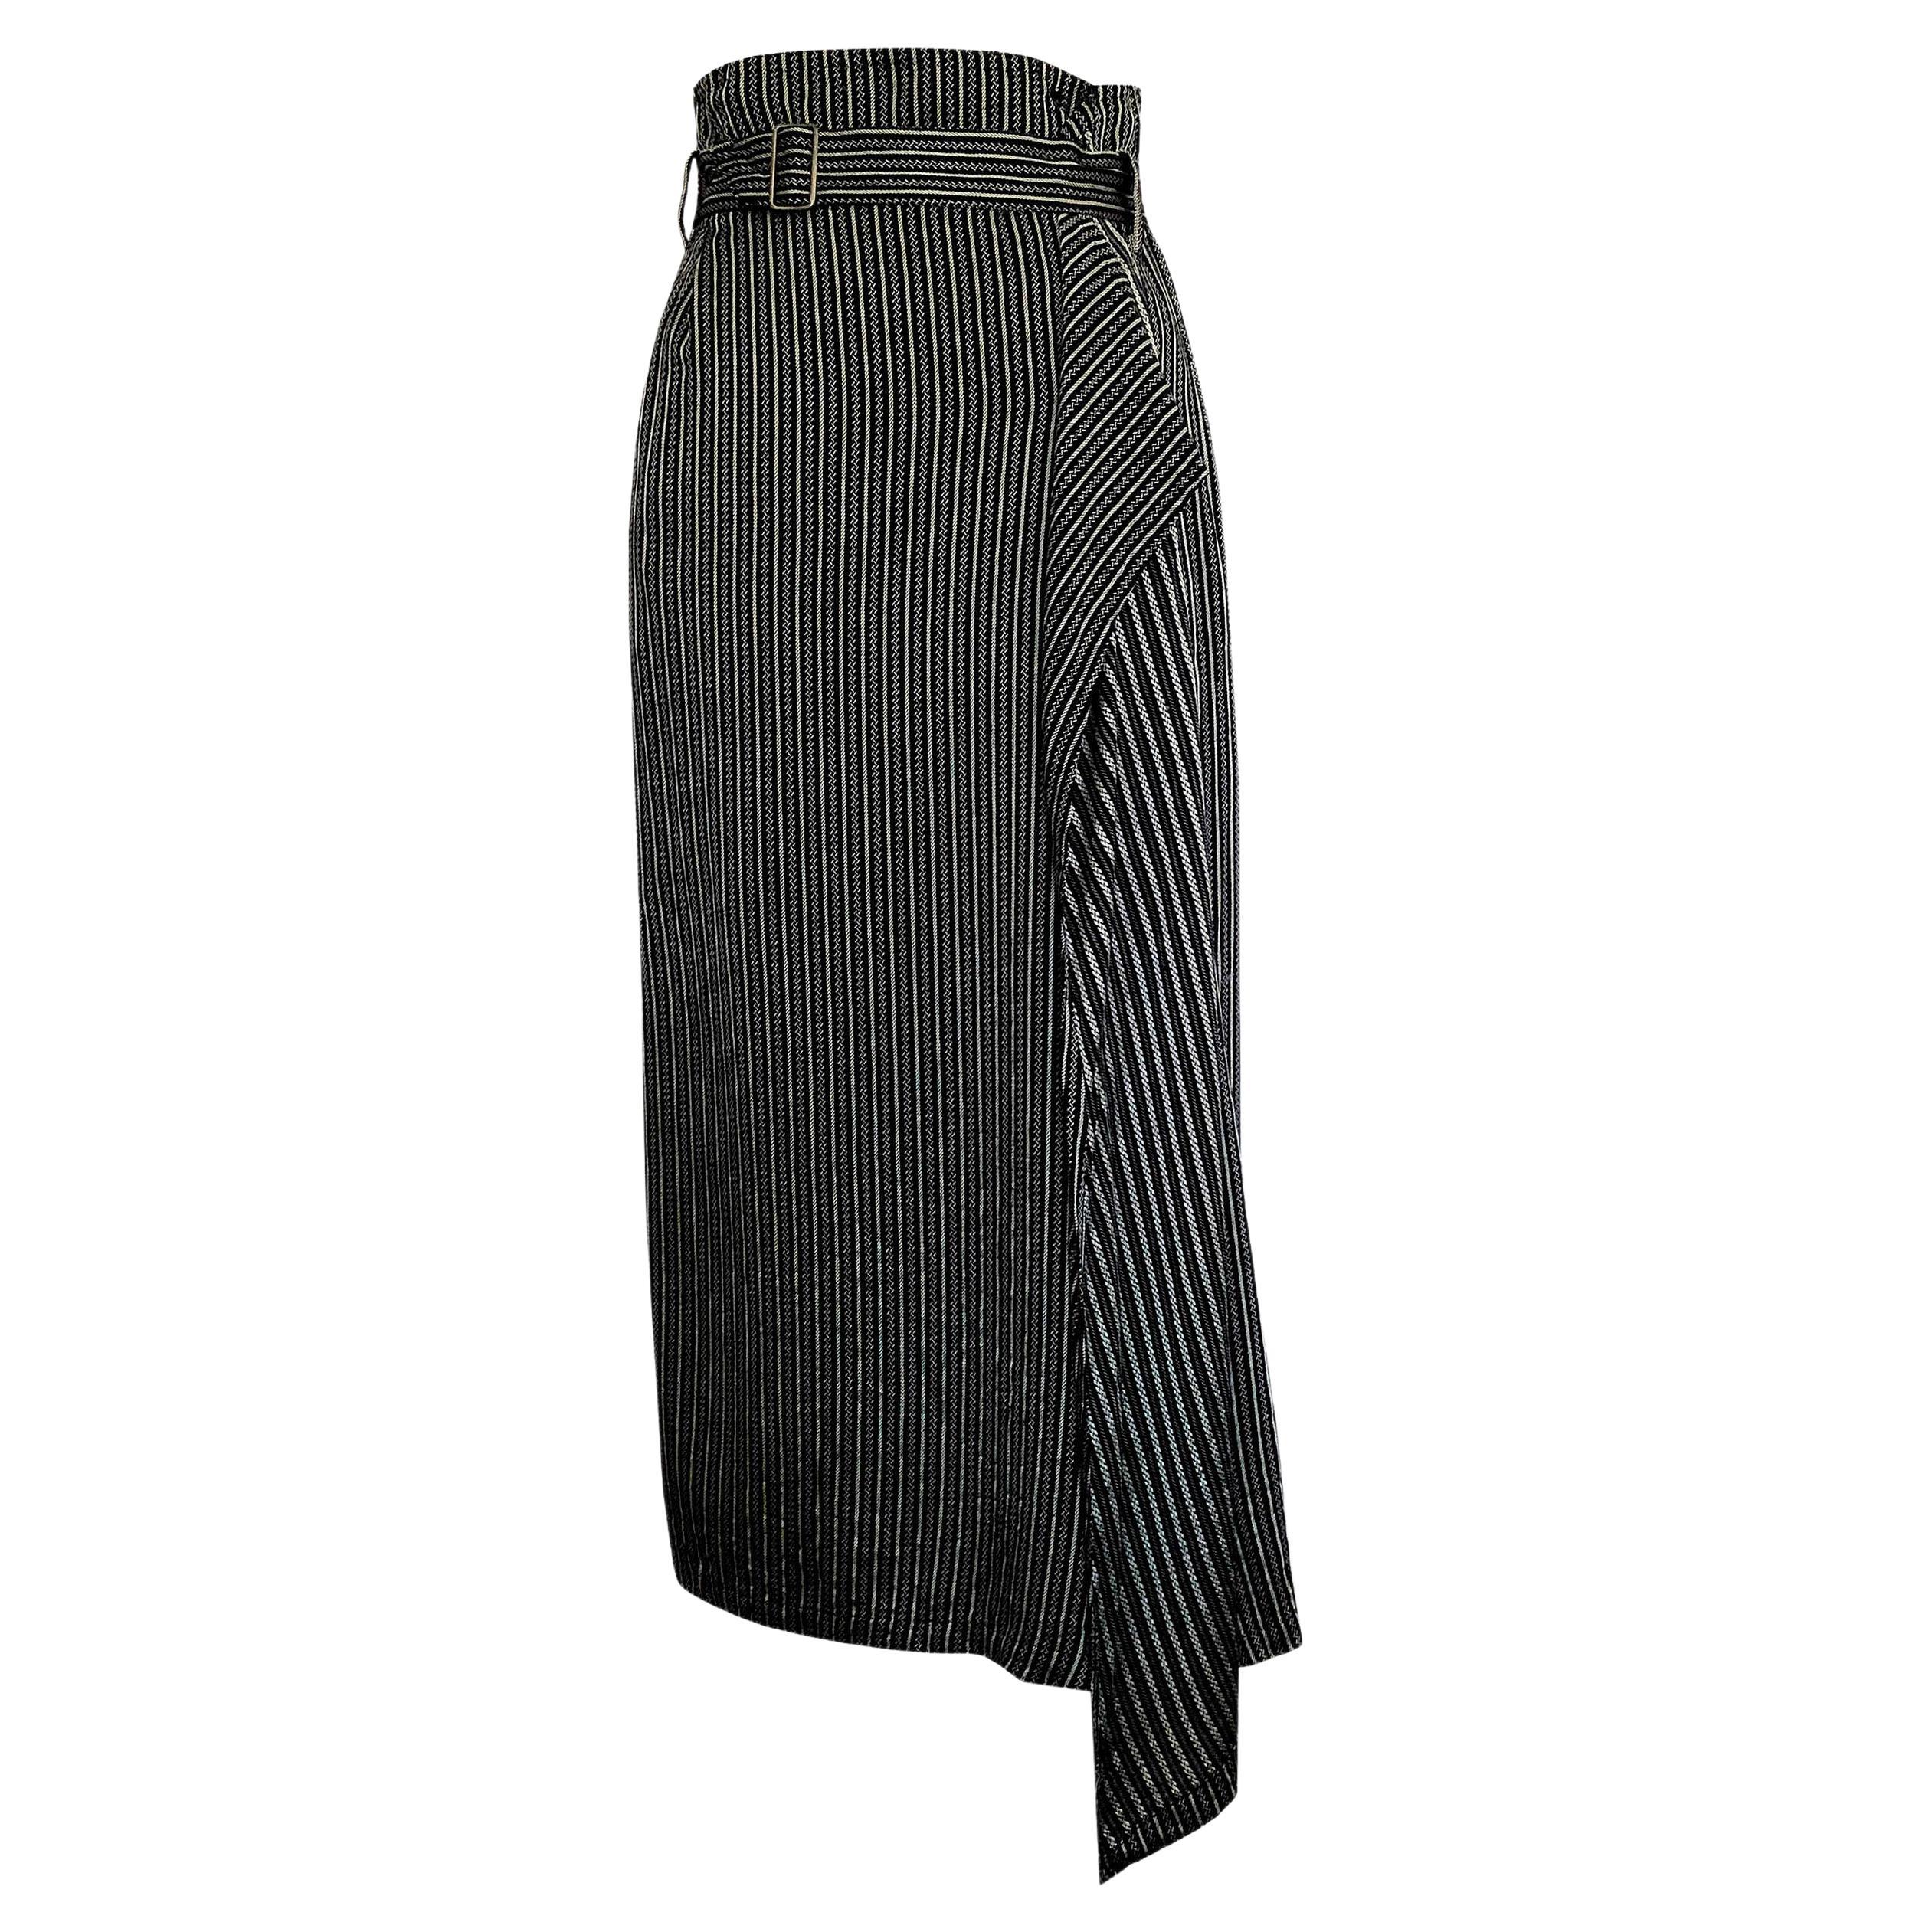 Product Details: Kansai Yamamoto - Rare 1980s Vintage - Asymmetric High Waisted Wrap Skirt - x 2 Side Pockets - Side Button + Front Belt Fasten 
Era: Rare 1980s Vintage
Label: Kansai Yamamoto / Kansai International
Size: 25 - UK M (Fits UK 10 to UK